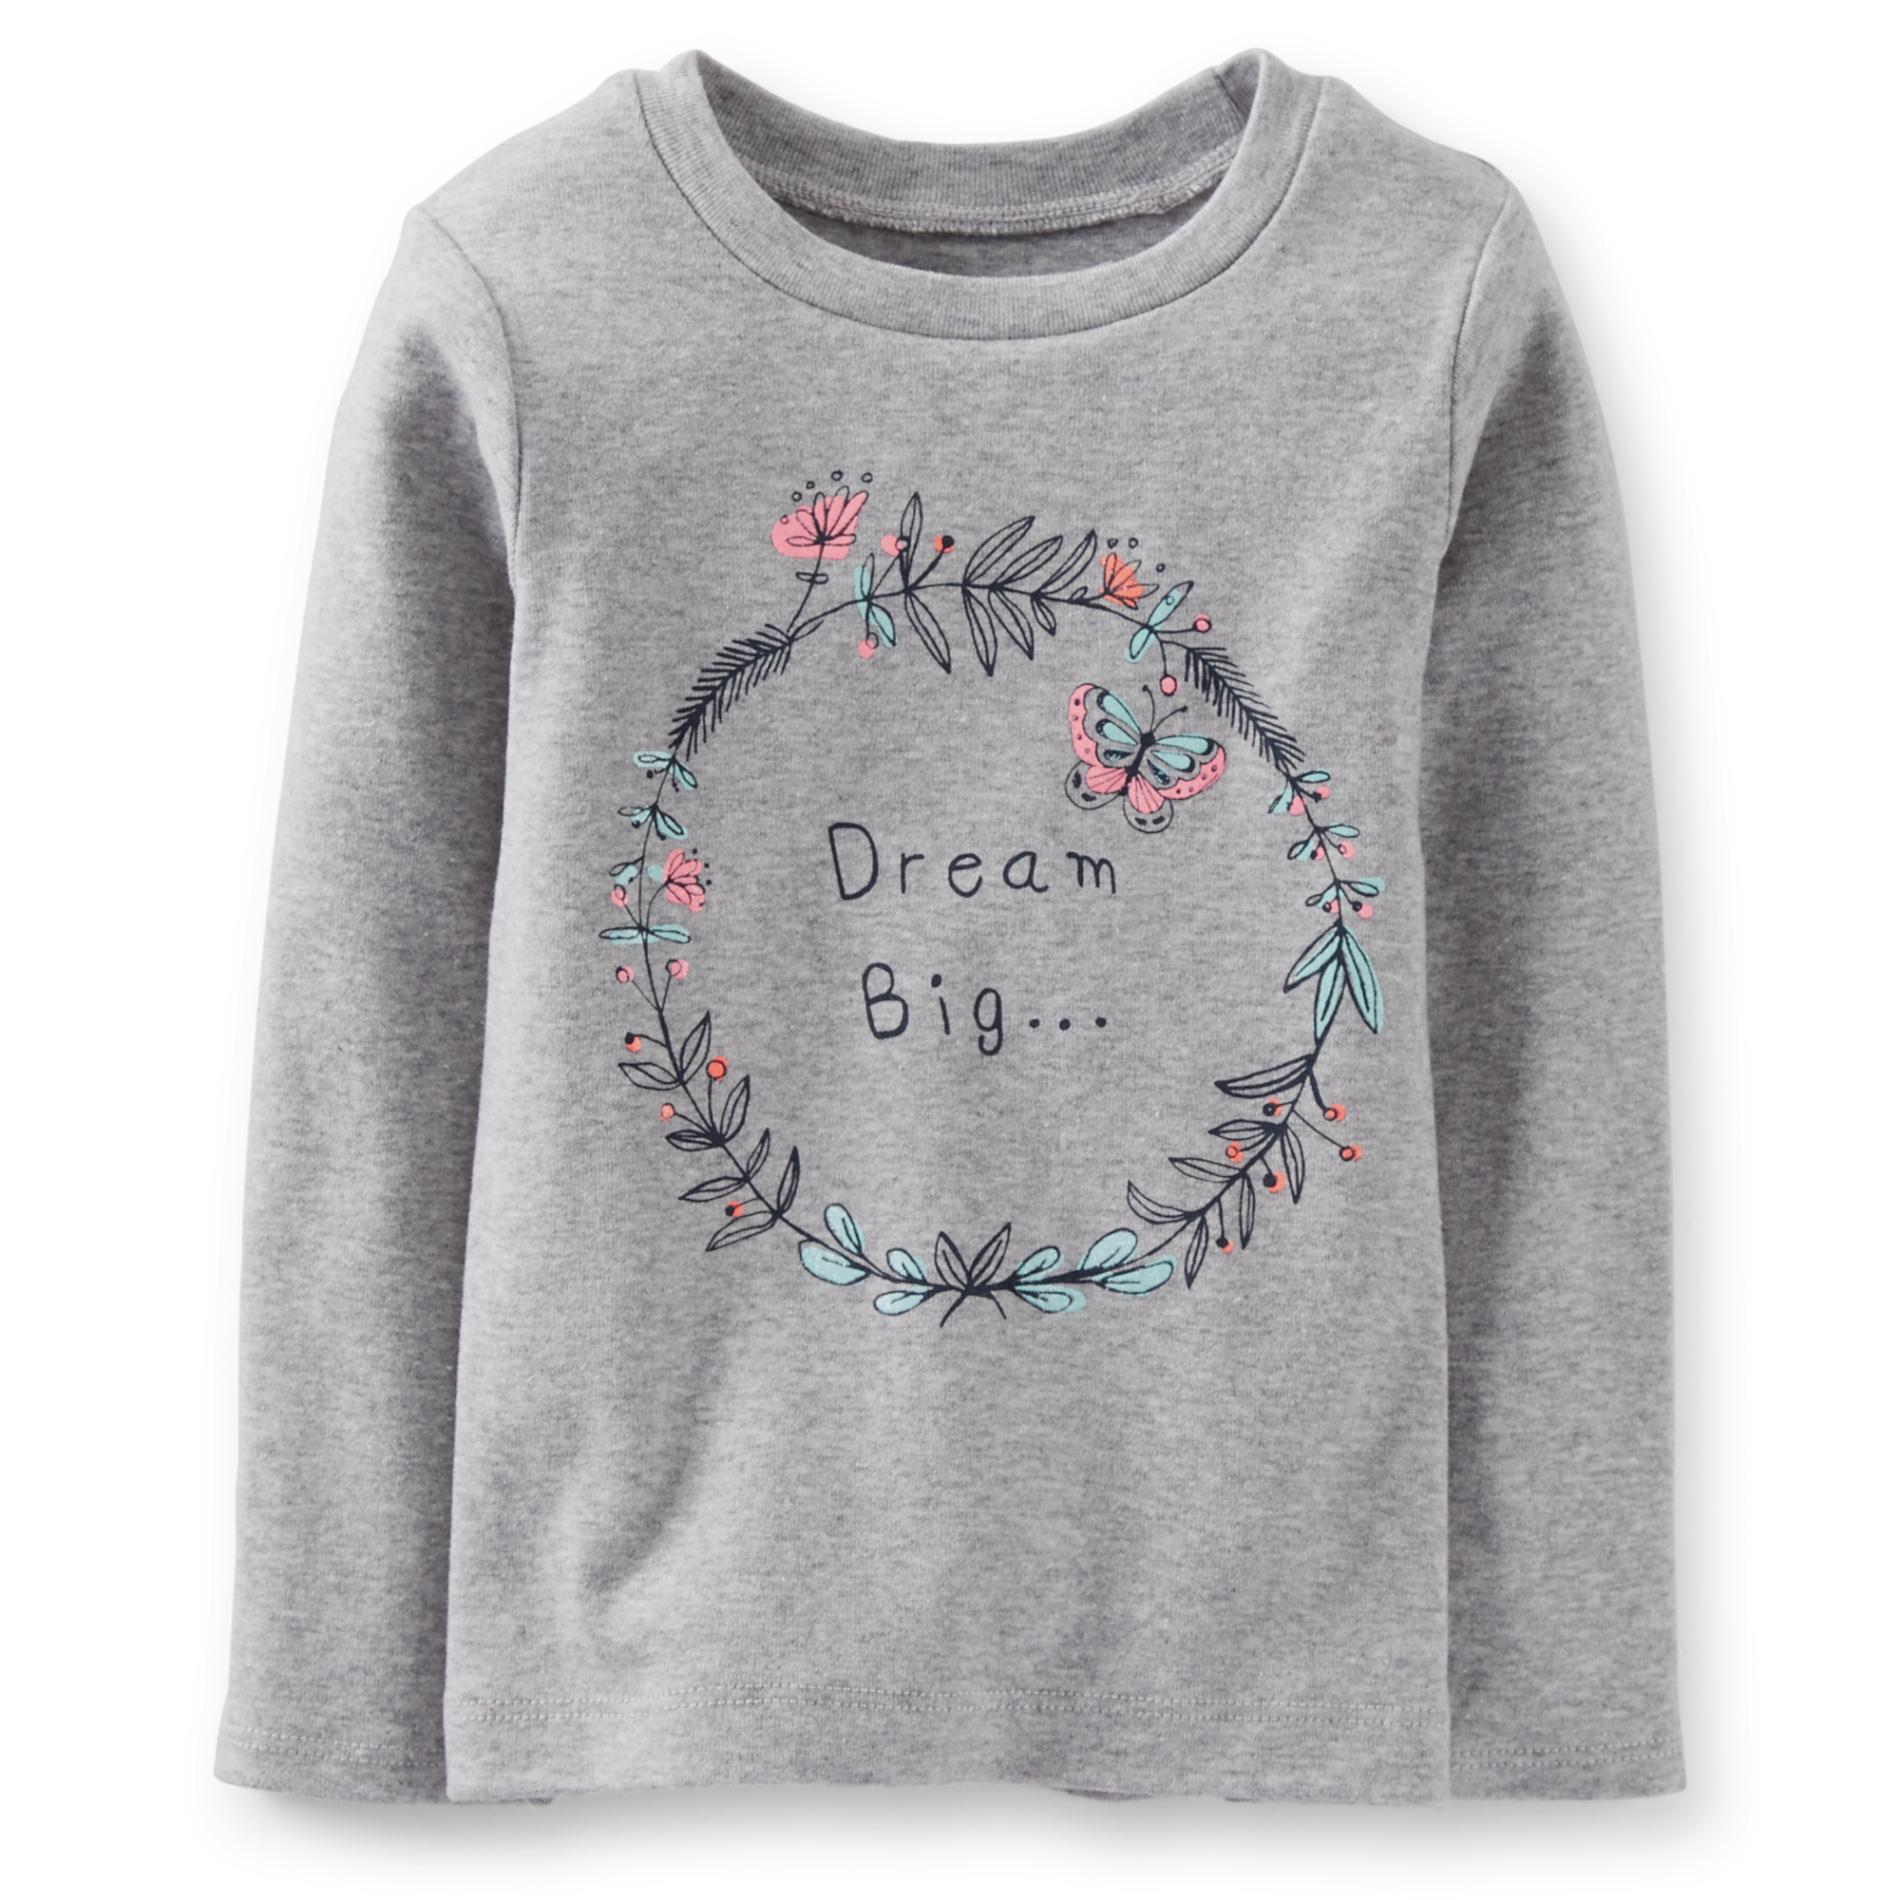 Carter's Toddler Girl's Graphic Shirt - Dream Big